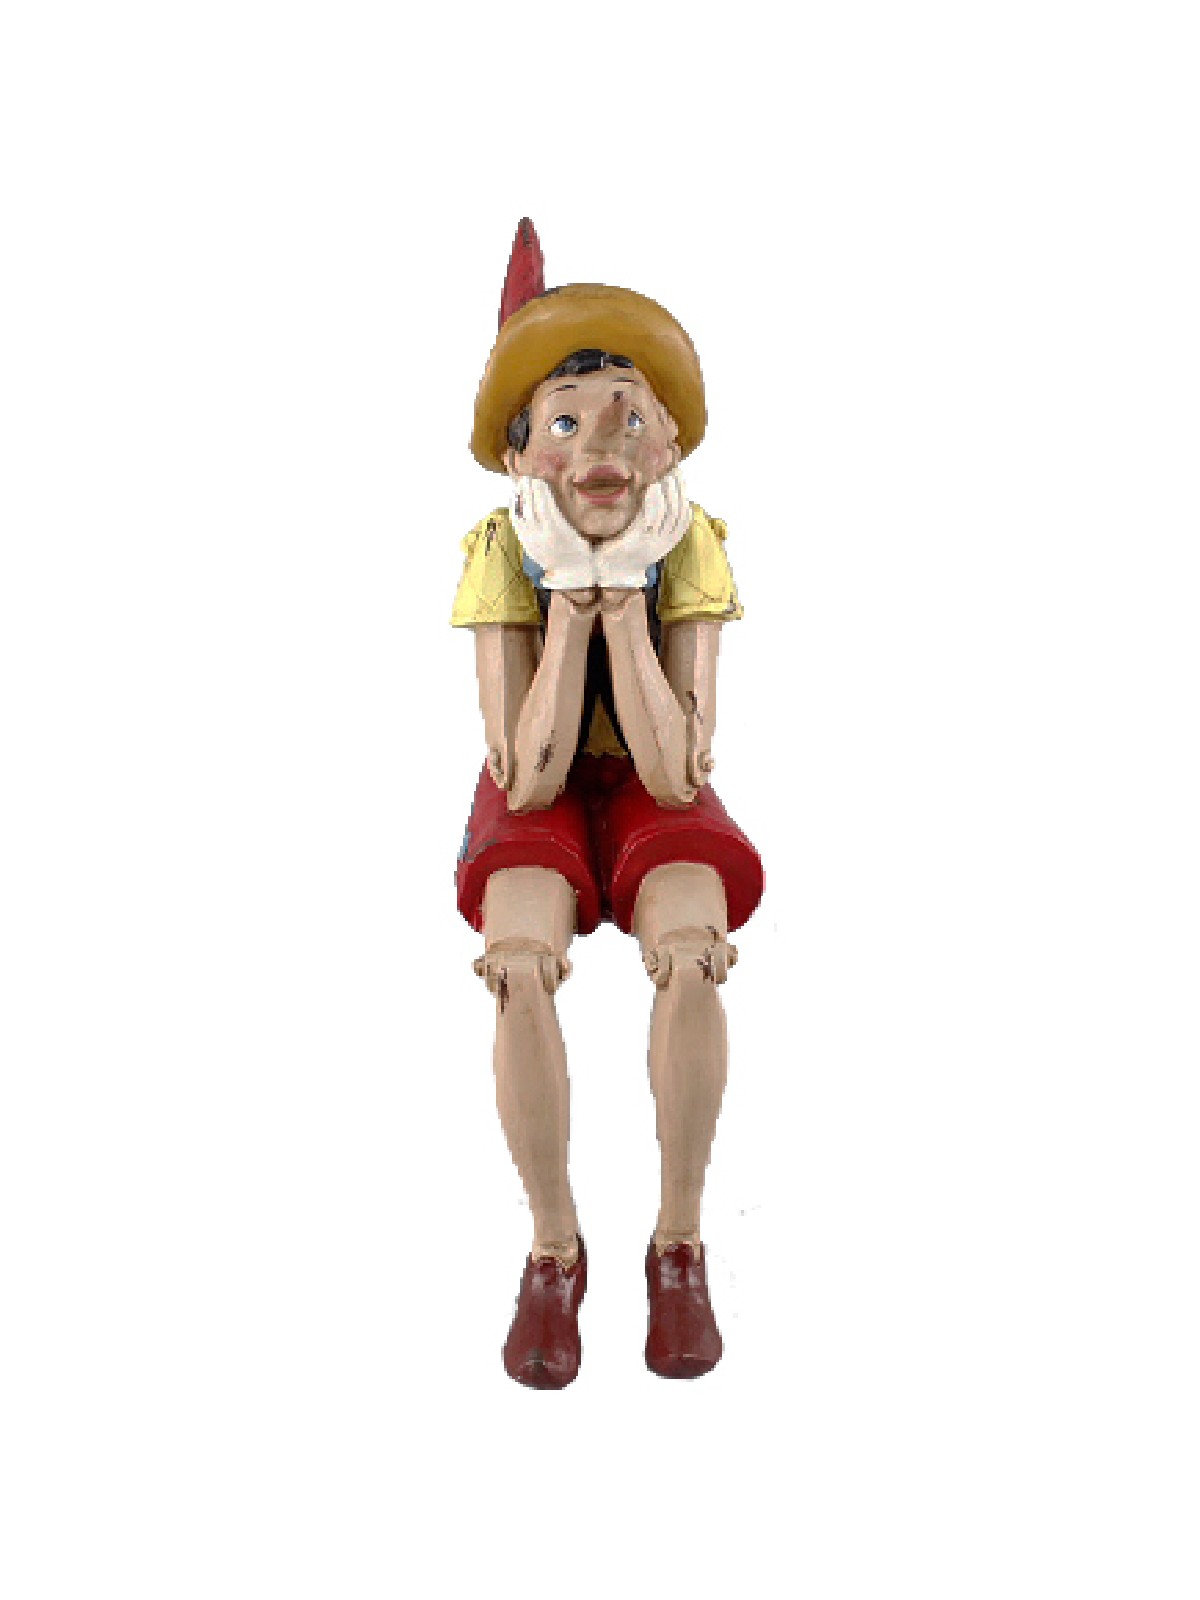 Pinocchio figure sitting